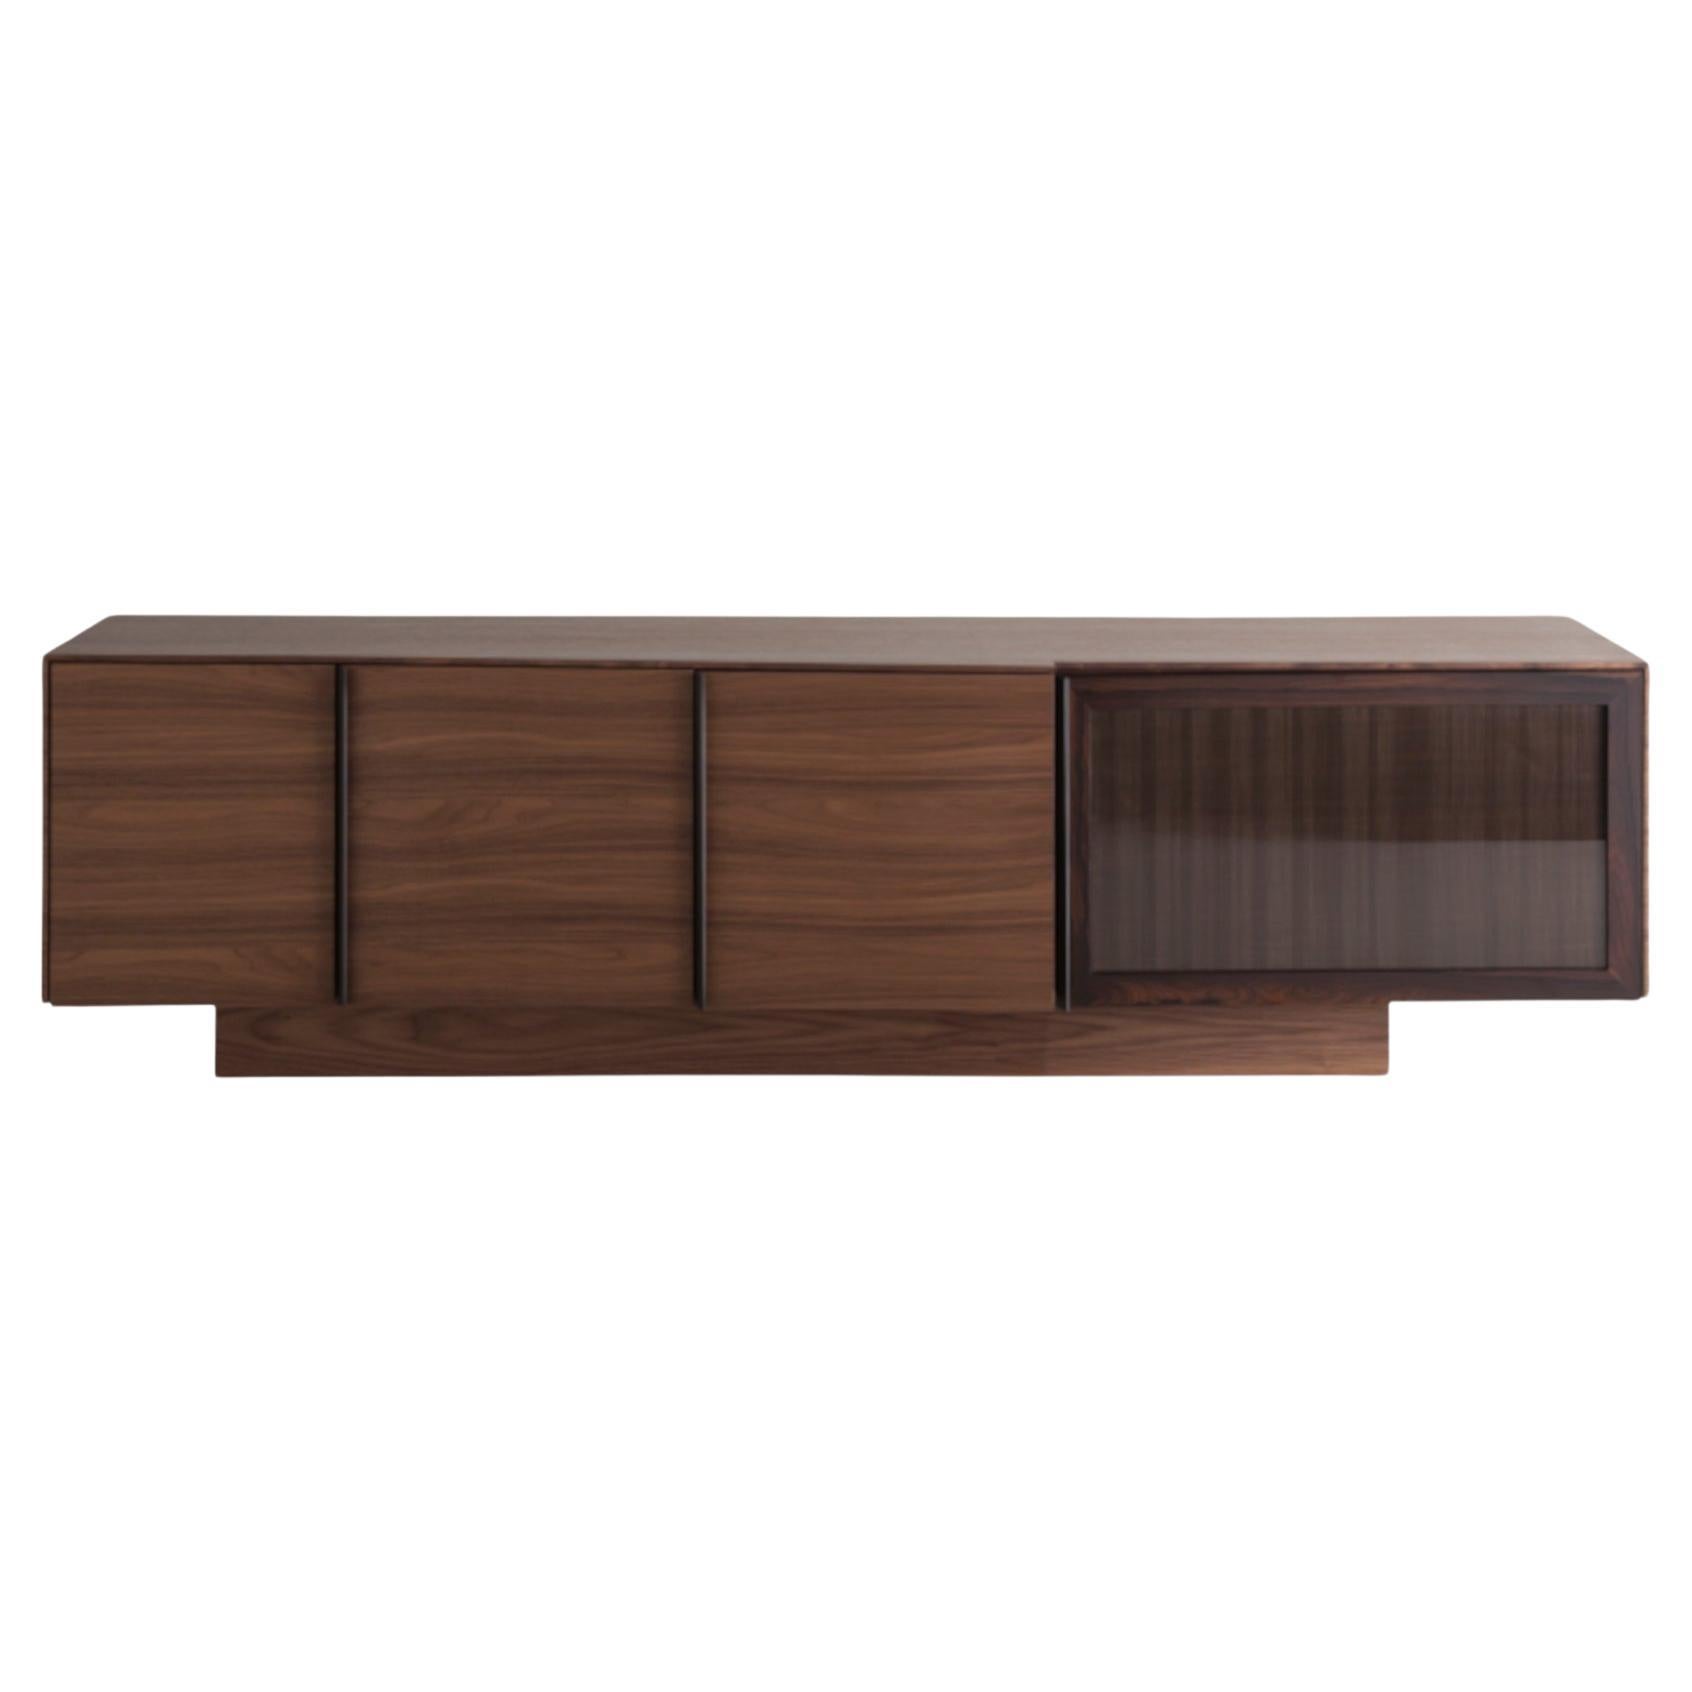 Contemporary by Studio Oxi, Sideboard, Wood Veneer Sideboard, Wood, Walnut